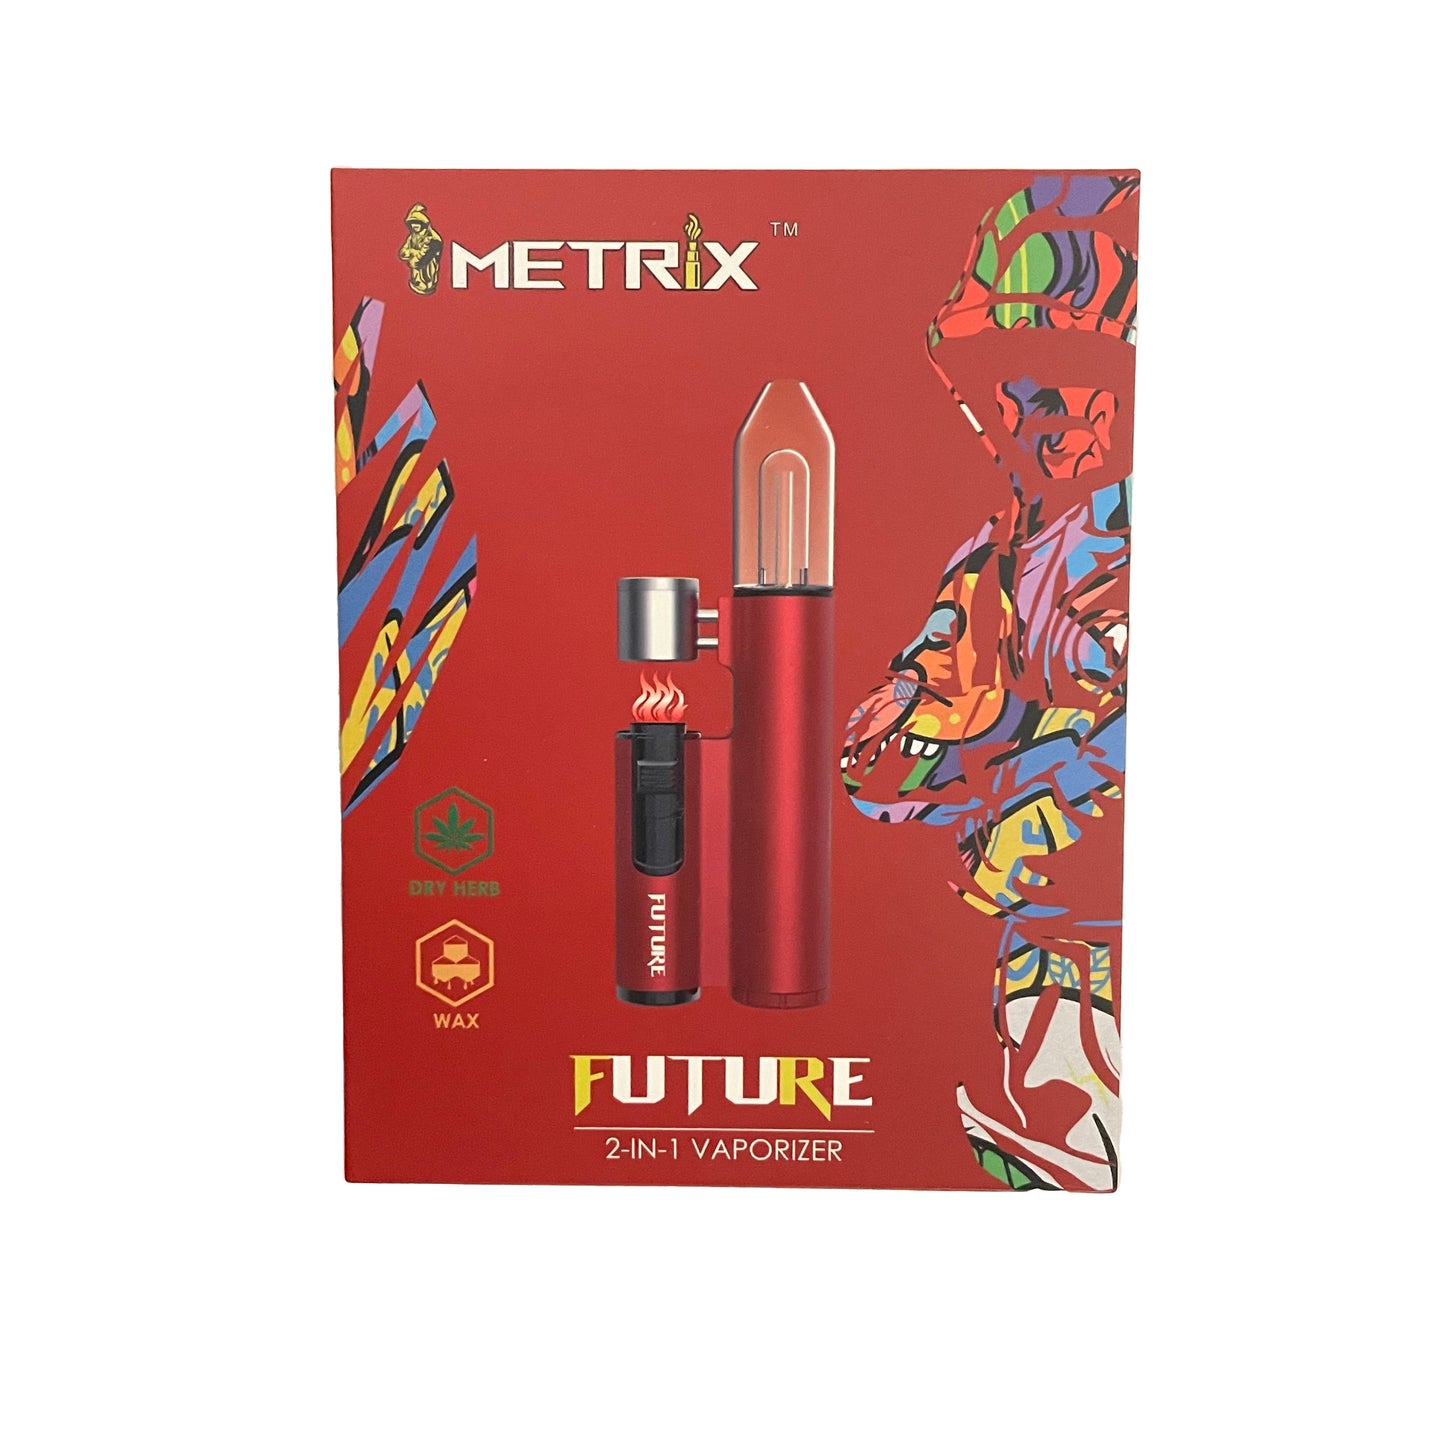 Metrix Future 2 in 1 Vaporizer